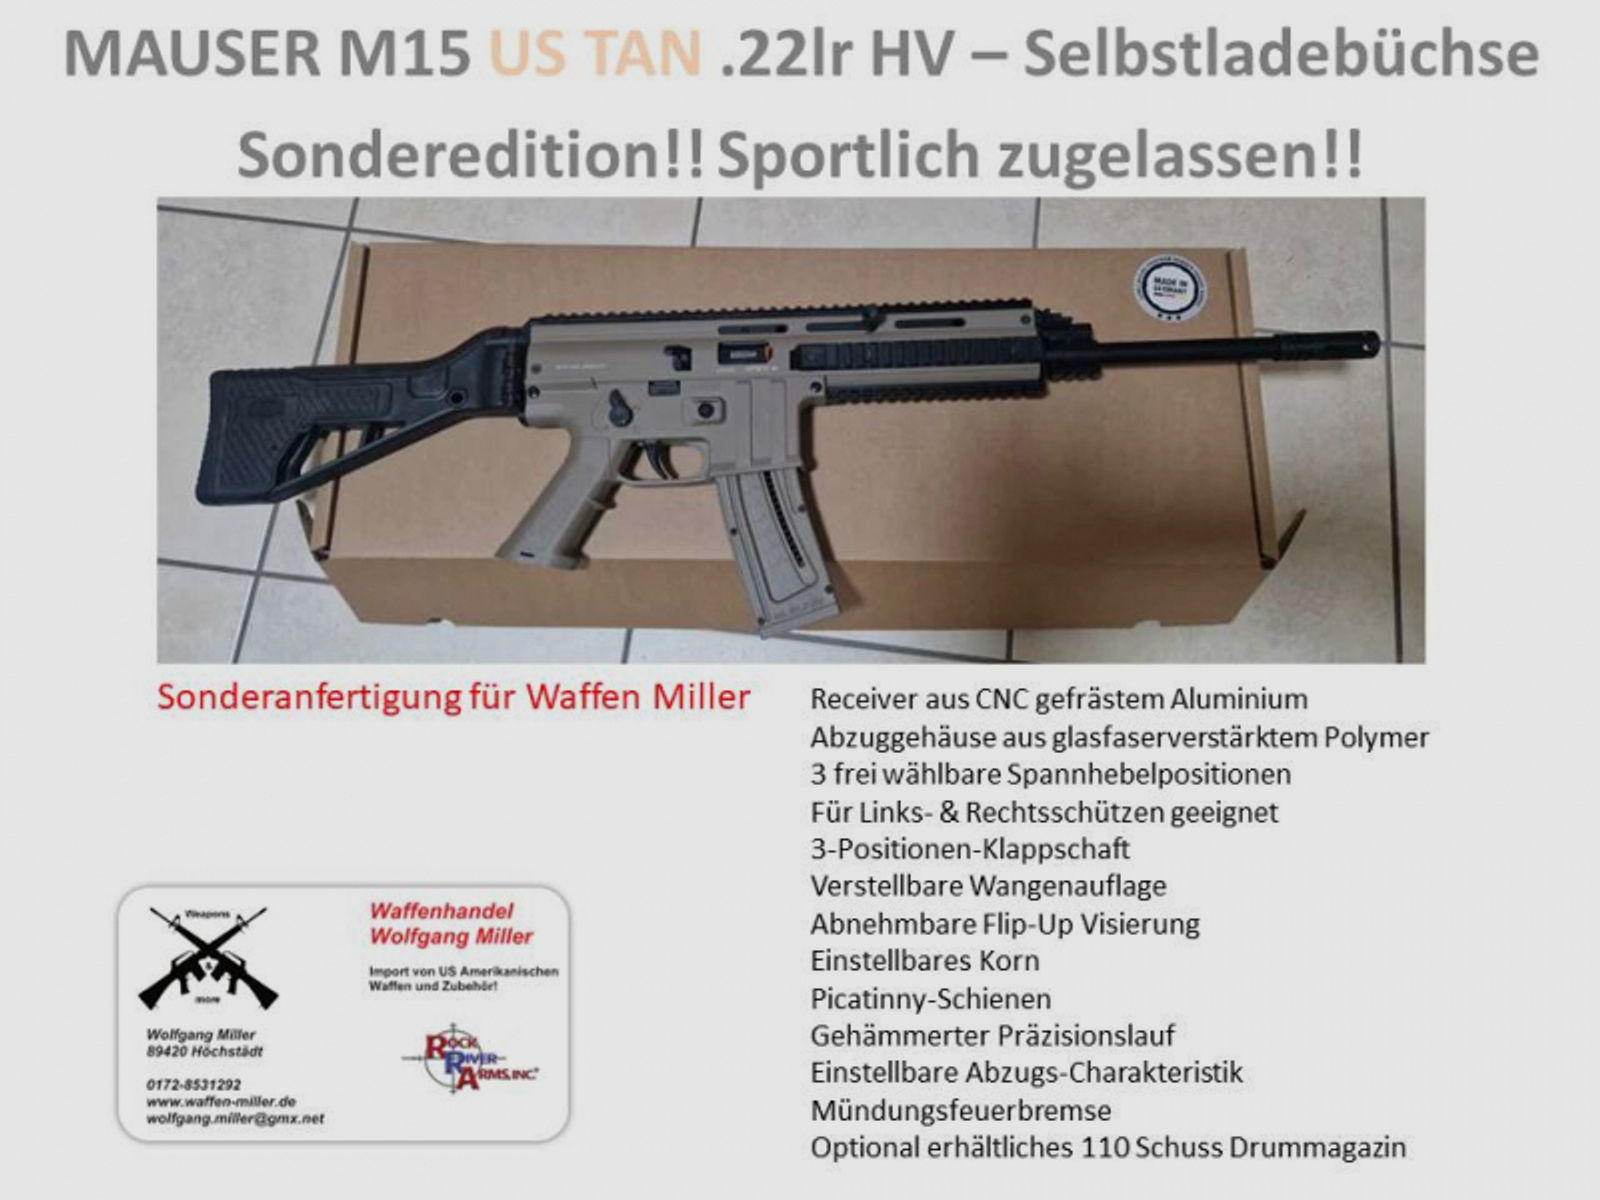 Mauser M-15 Sonderedition in US TAN .22lr